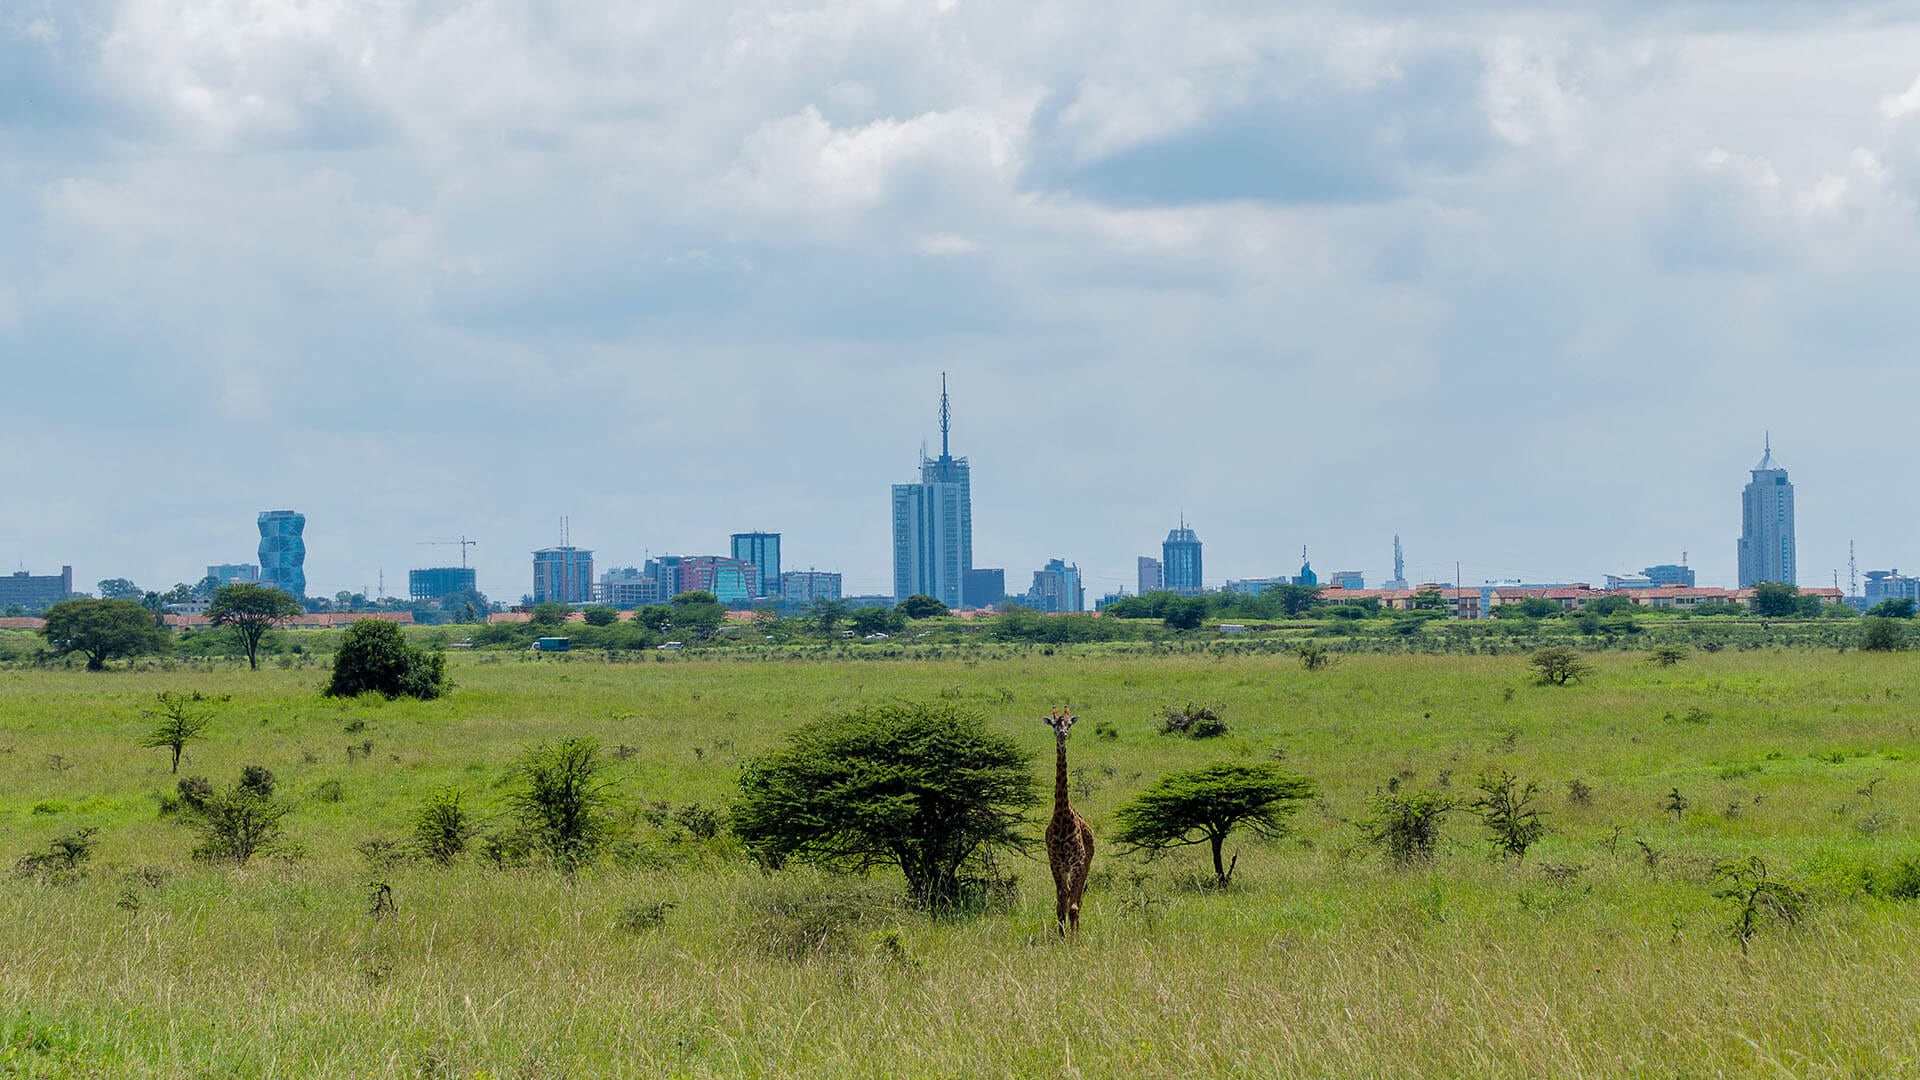 Grassland outside a city symbolizes urbanization and shifting African demographics